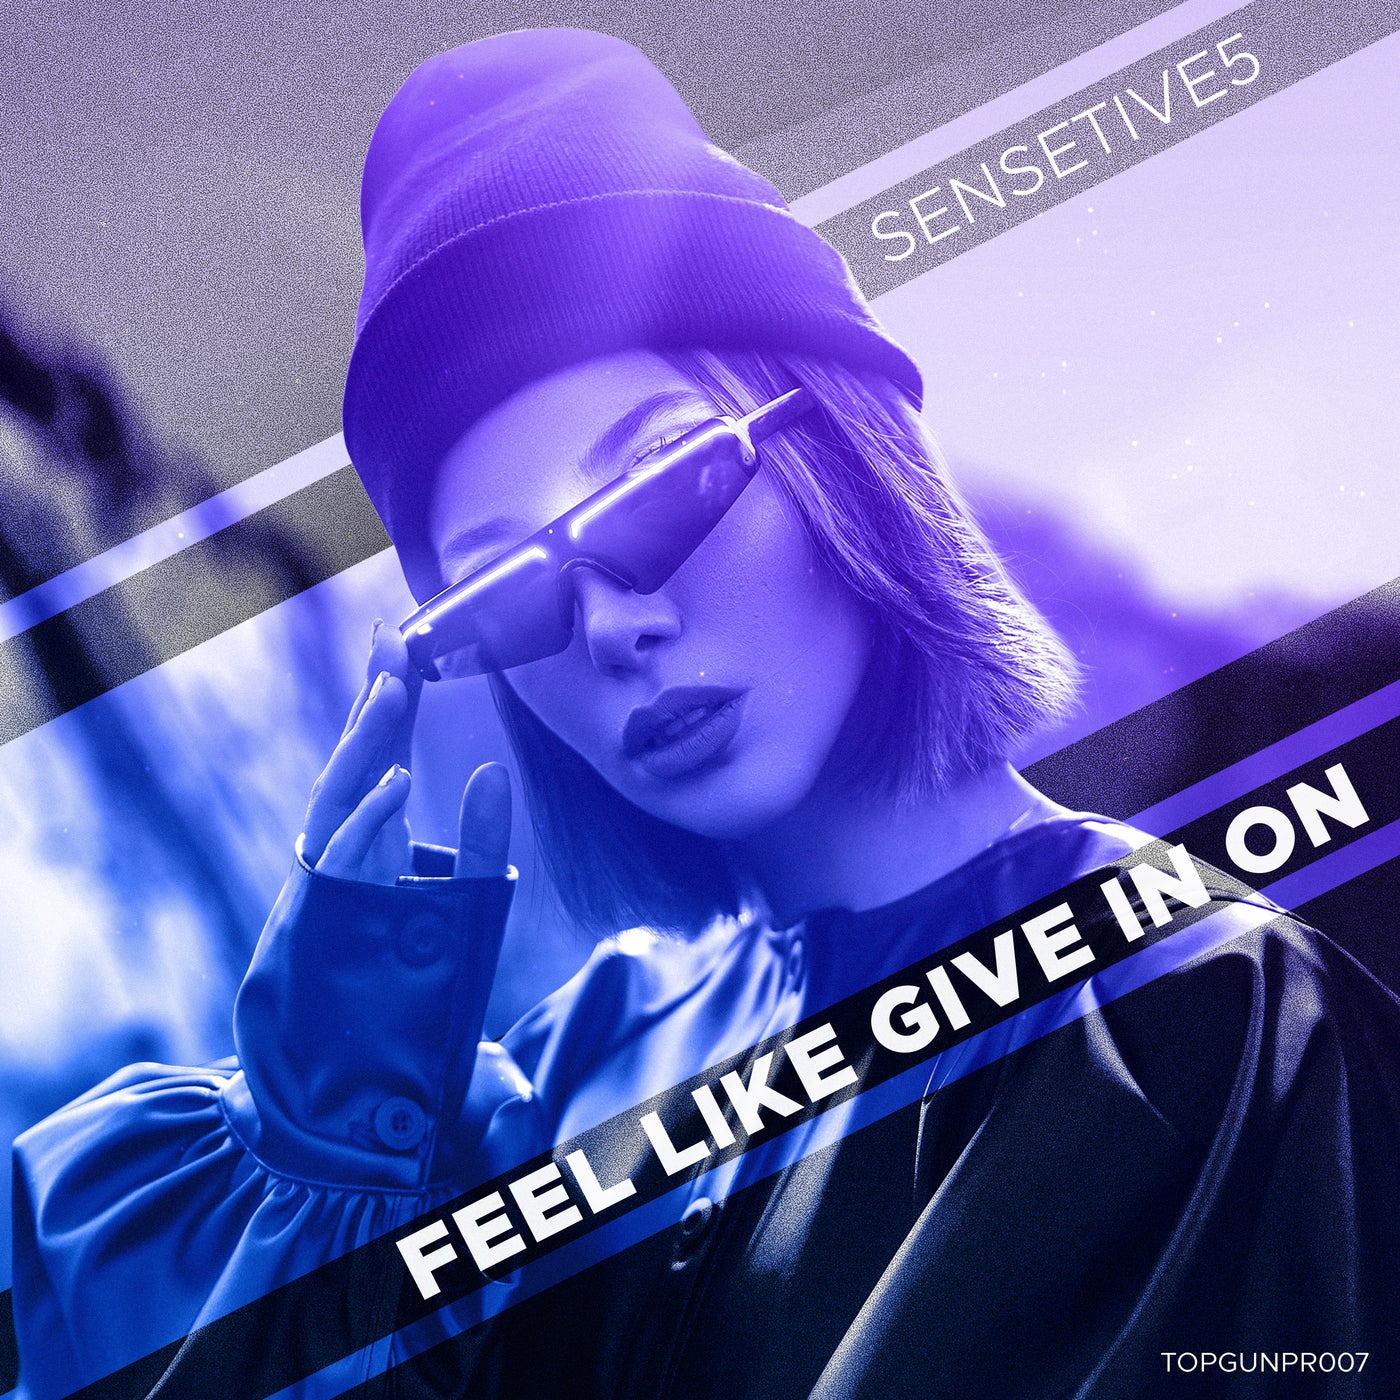 Sensetive5 - Feel Like Give In On (Original Mix)